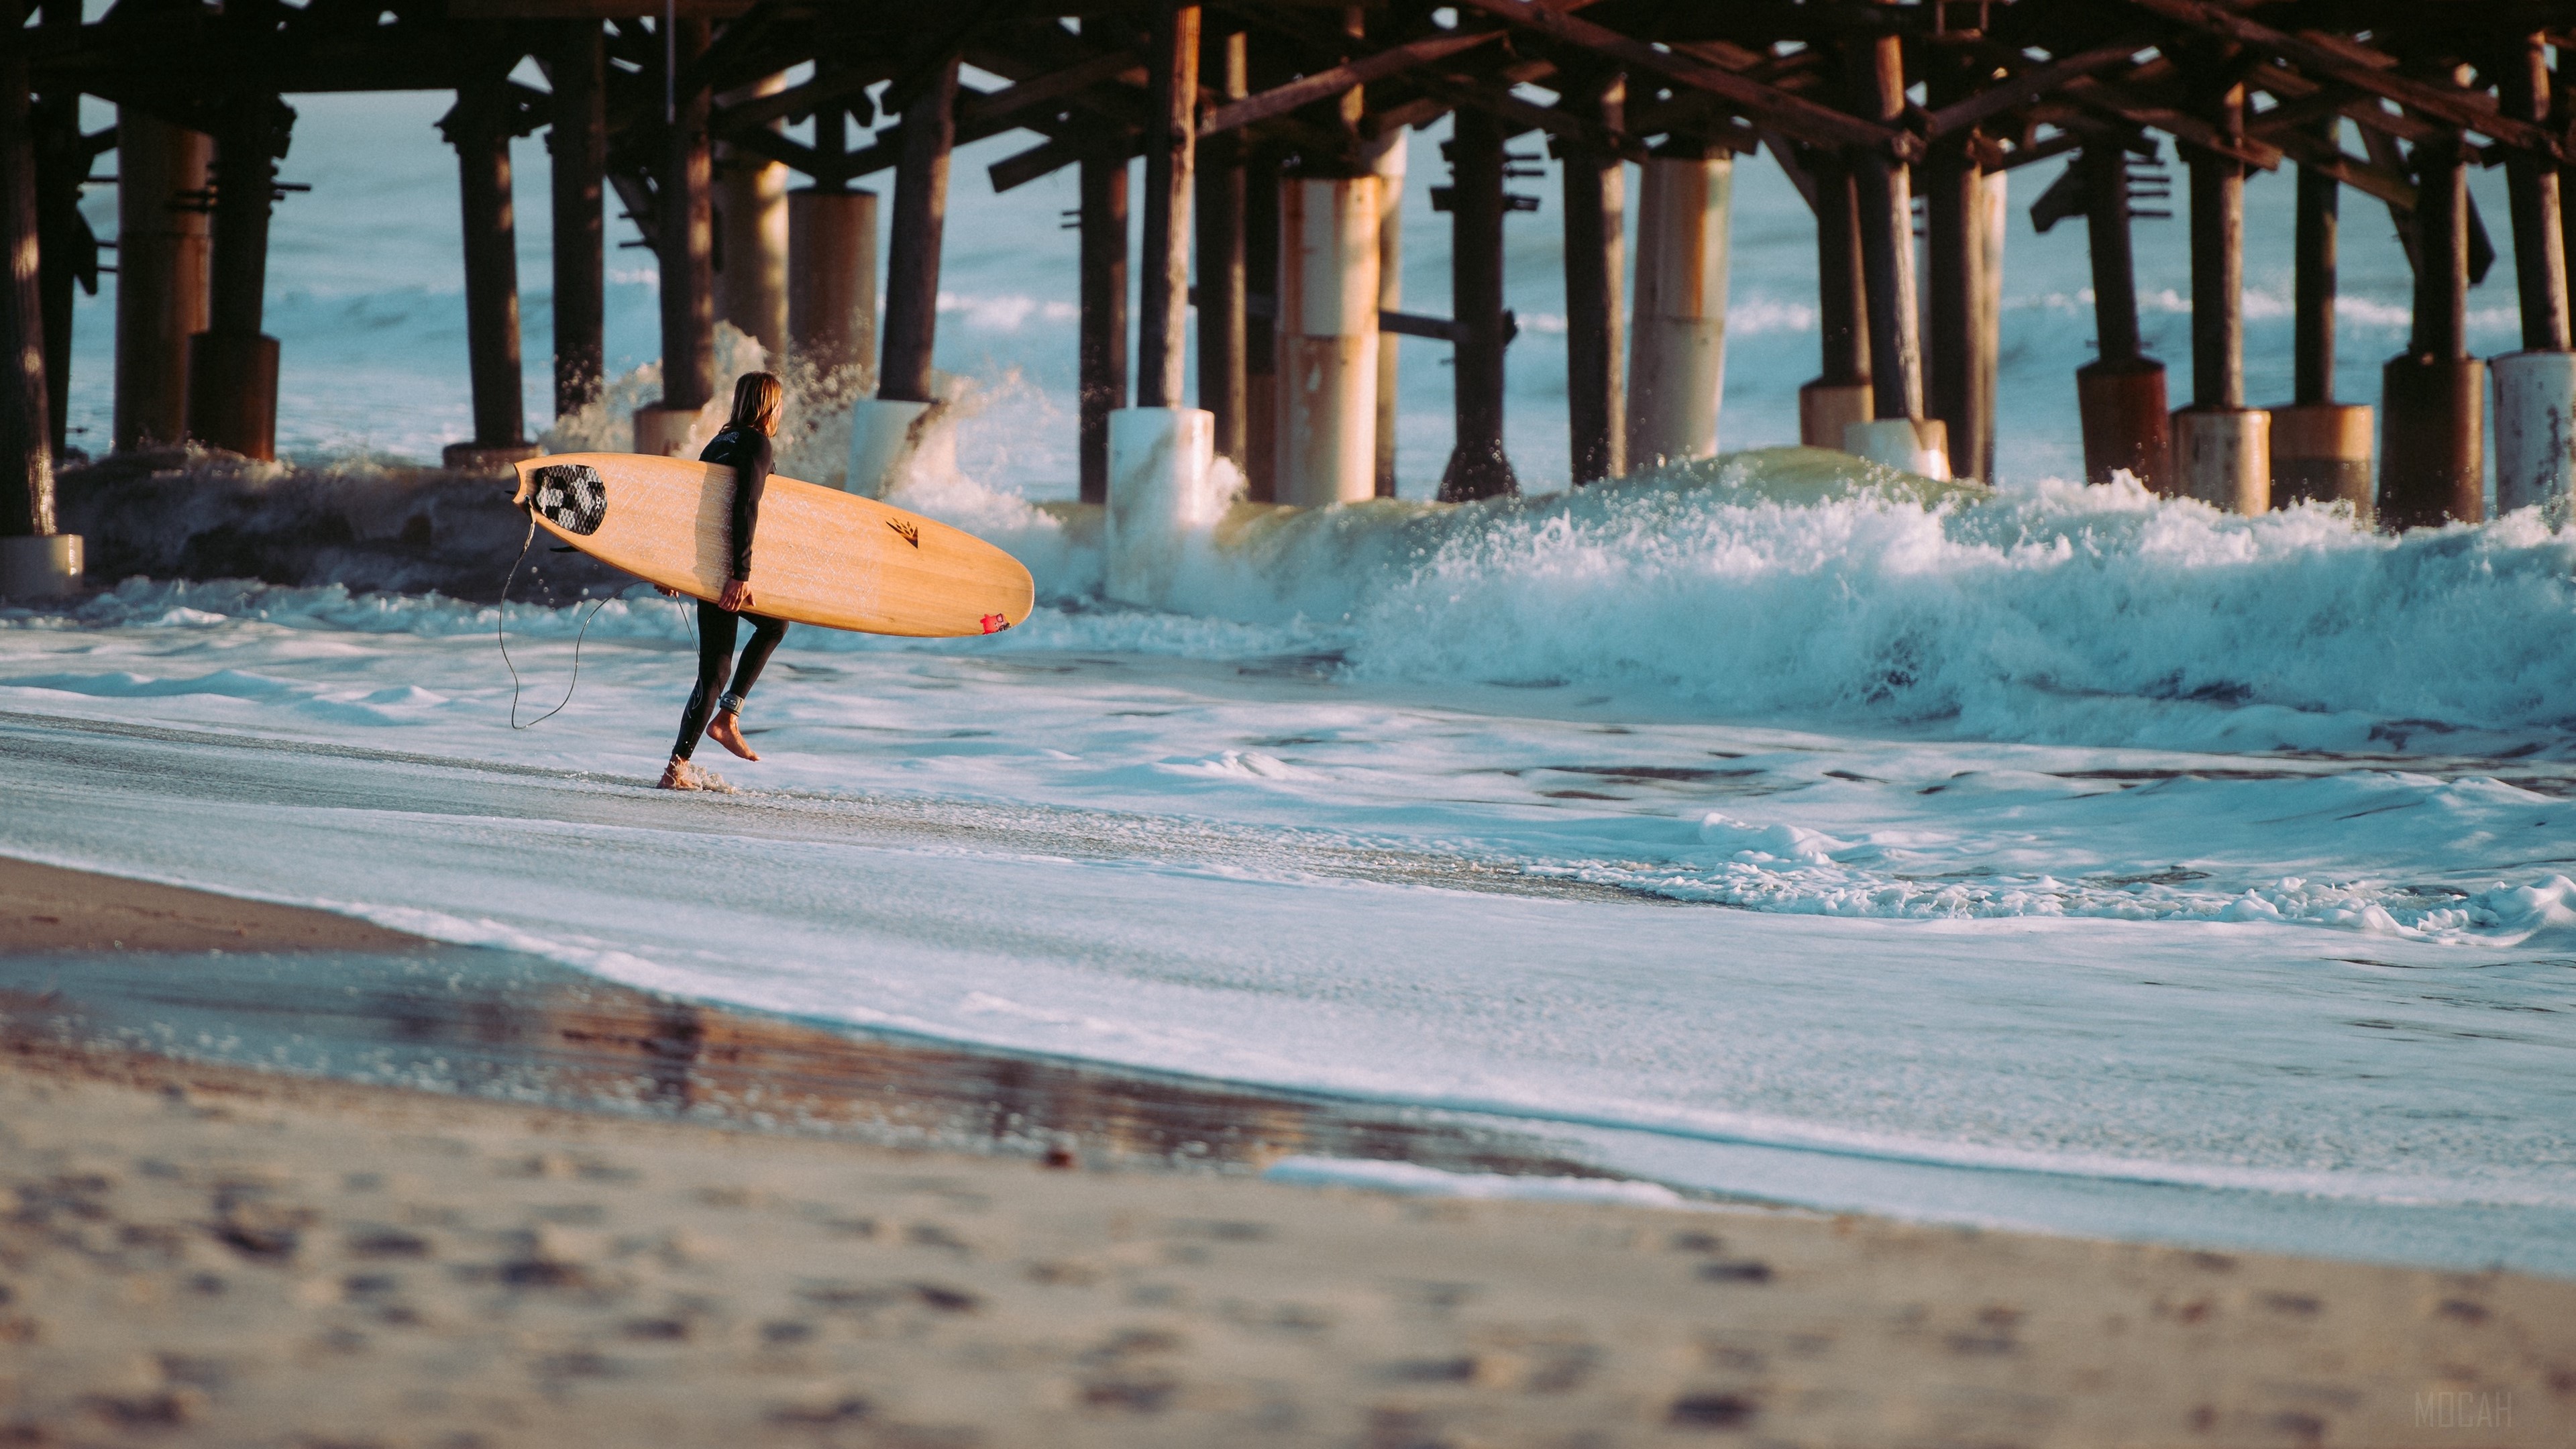 surfer 1080P, 2k, 4k HD wallpaper, background free download